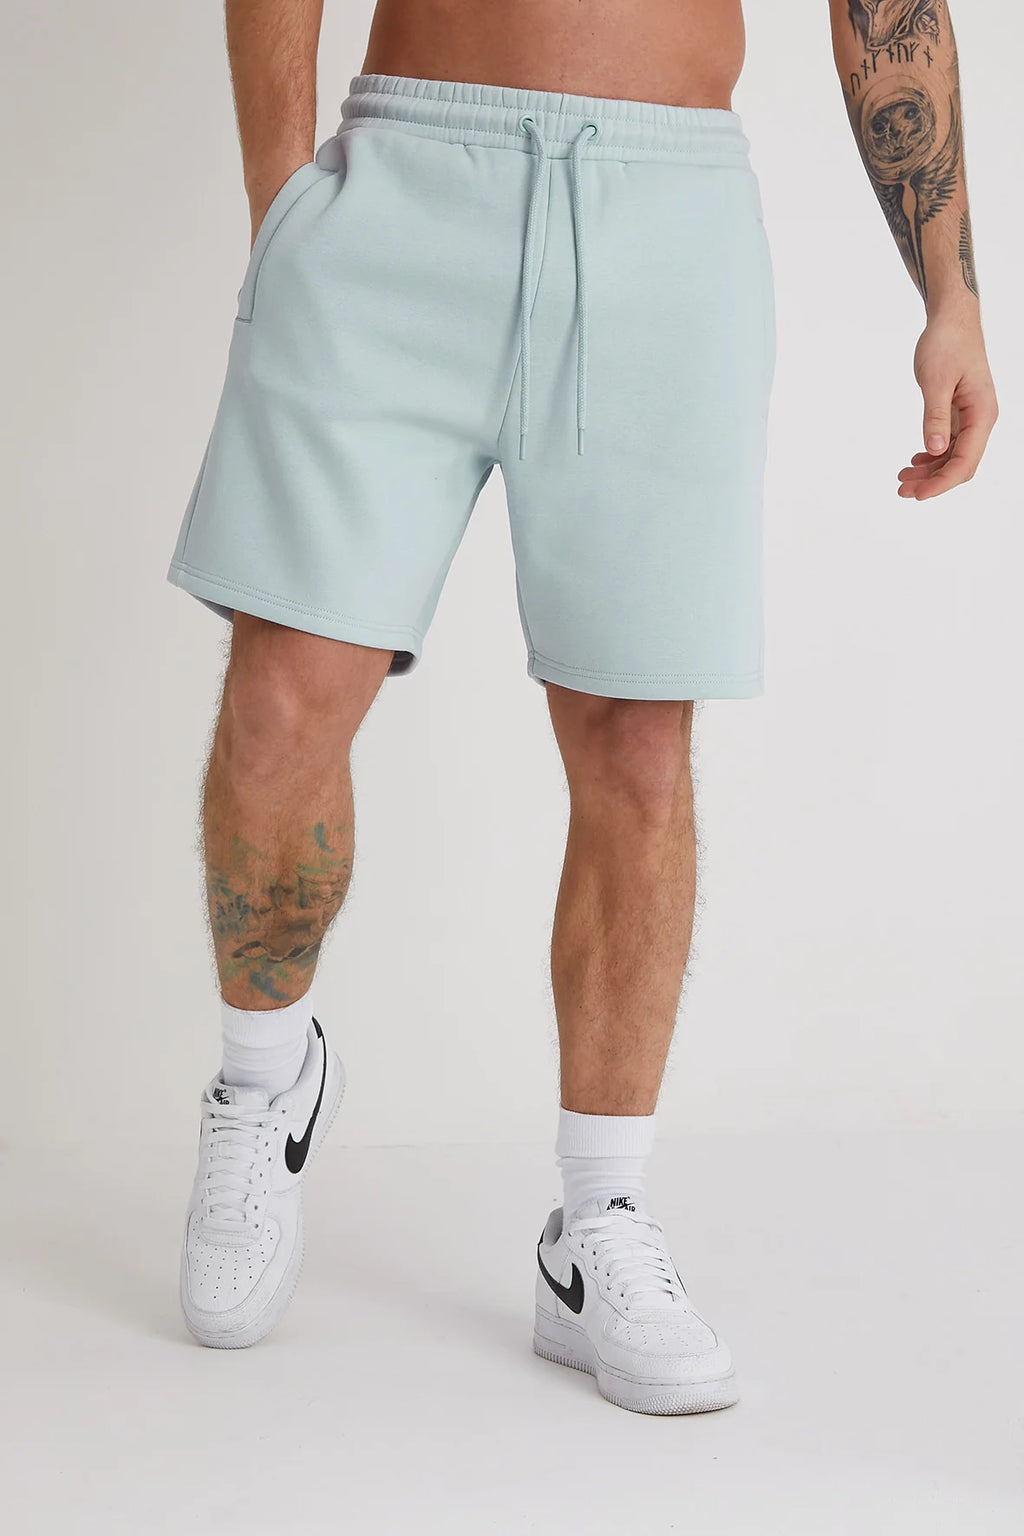 BANKS premium brushback fleece shorts in CERULEAN